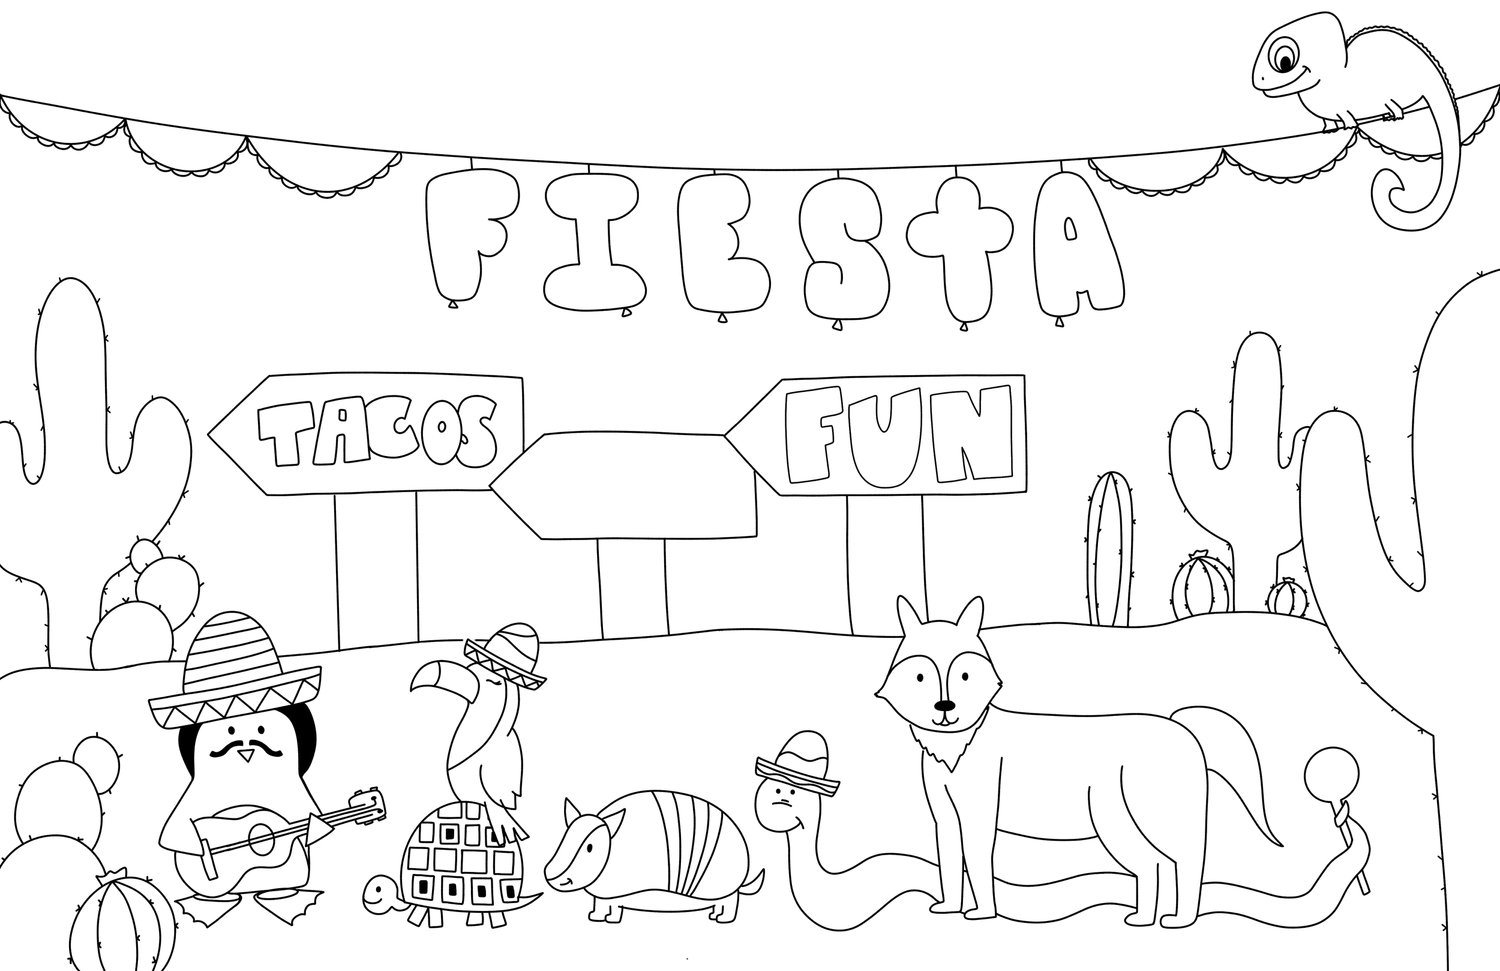 Fiesta party loring page digital â the doodle shop